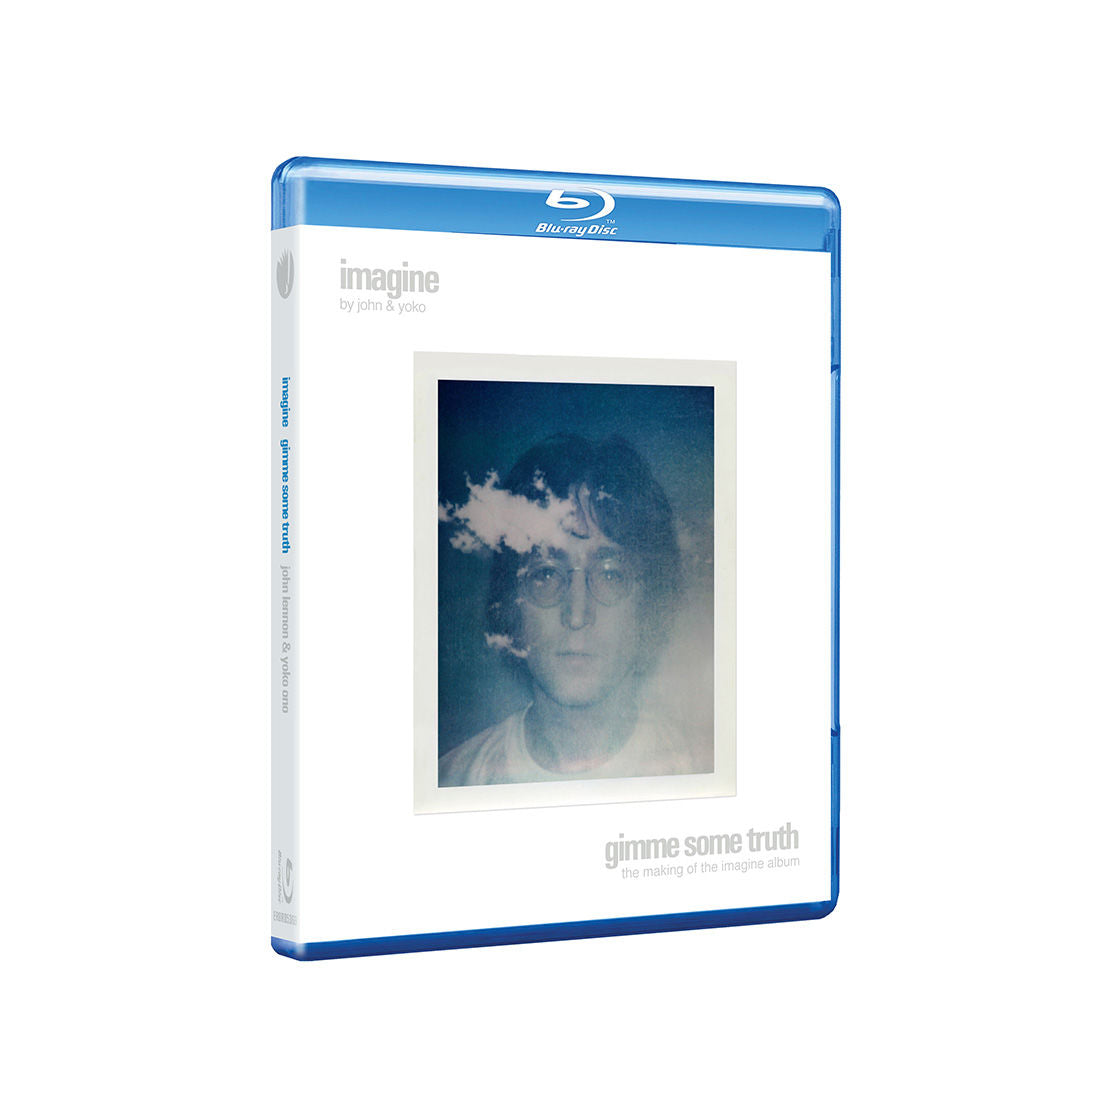 John Lennon, Yoko Ono - Imagine & Gimme Some Truth: Blu-Ray